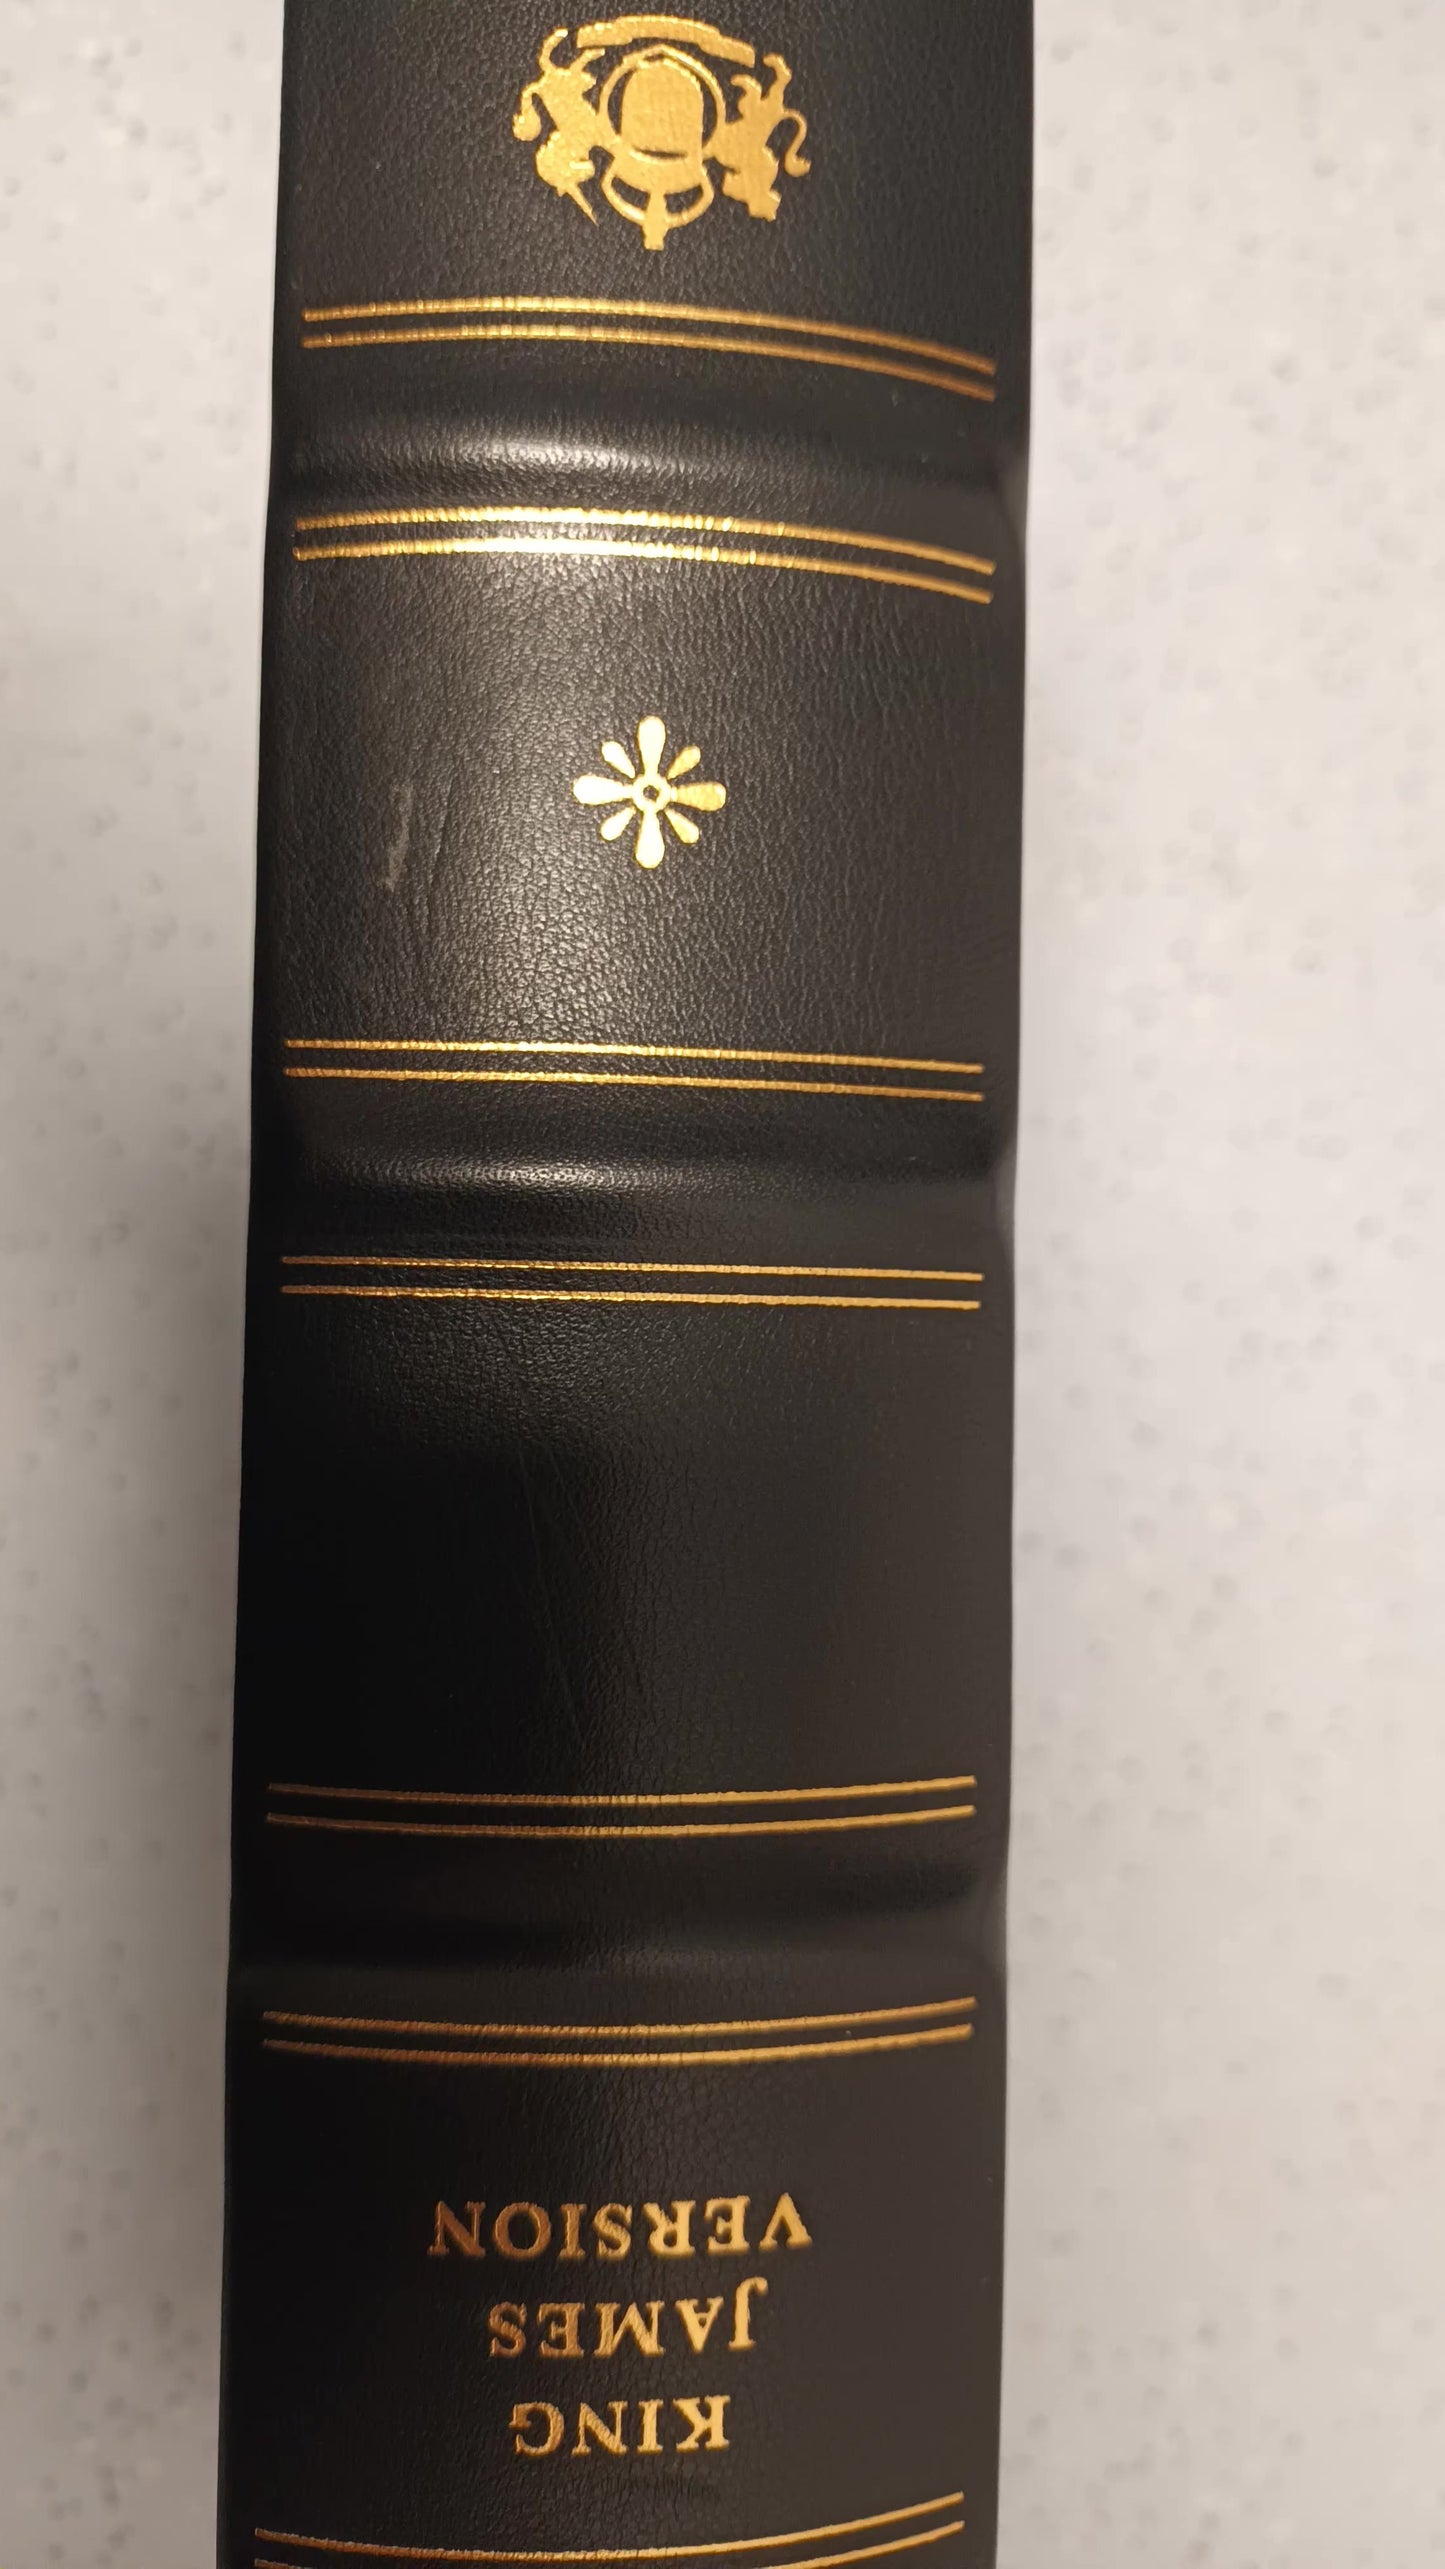 SALE Cambridge KJV Family Chronicle Bible, Black Calfskin Leather over Boards